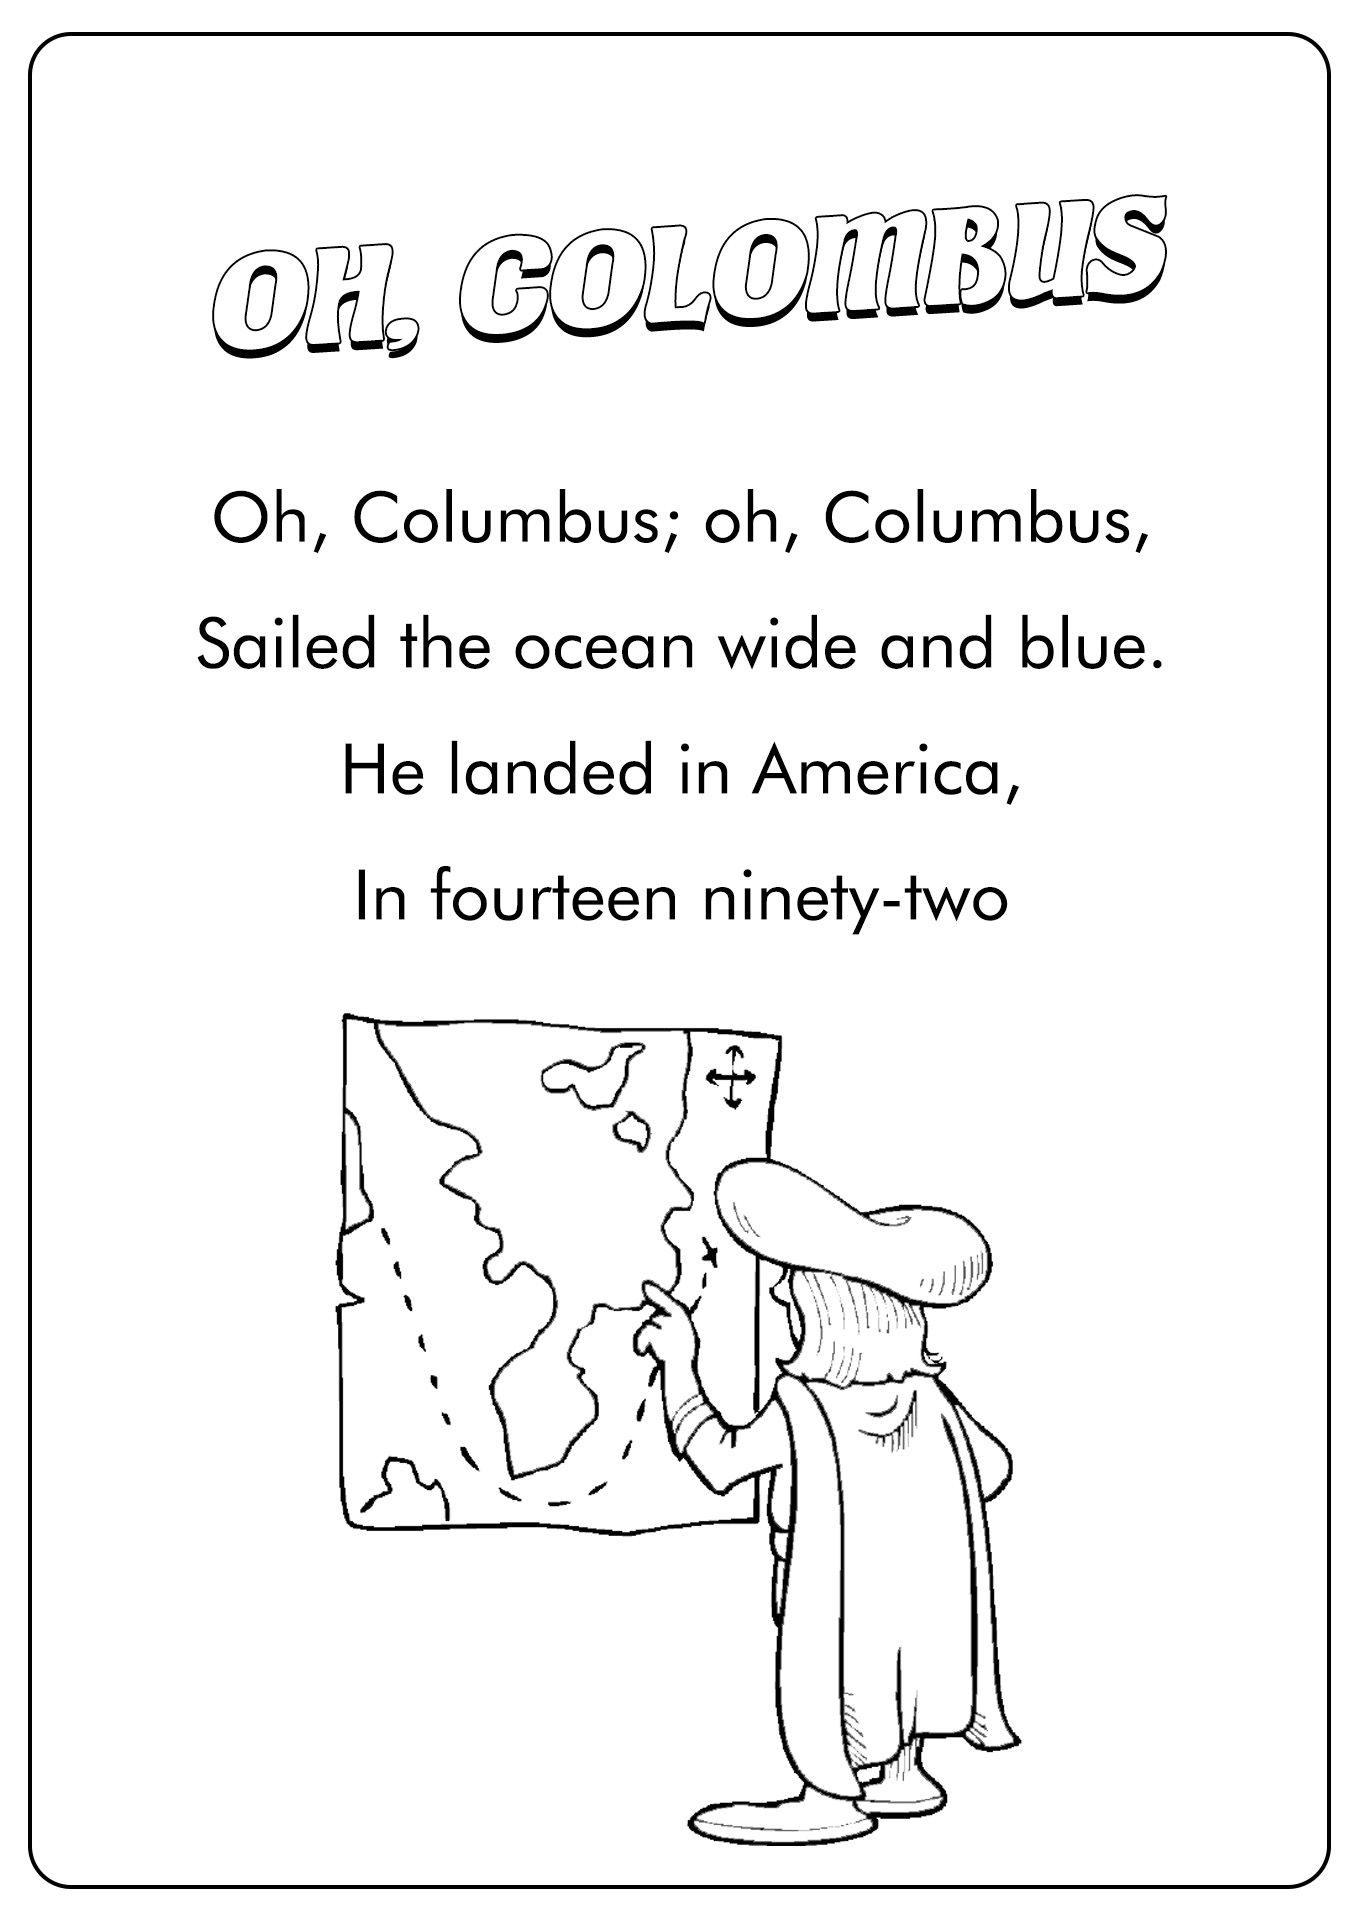 Kids Poem About Christopher Columbus Image